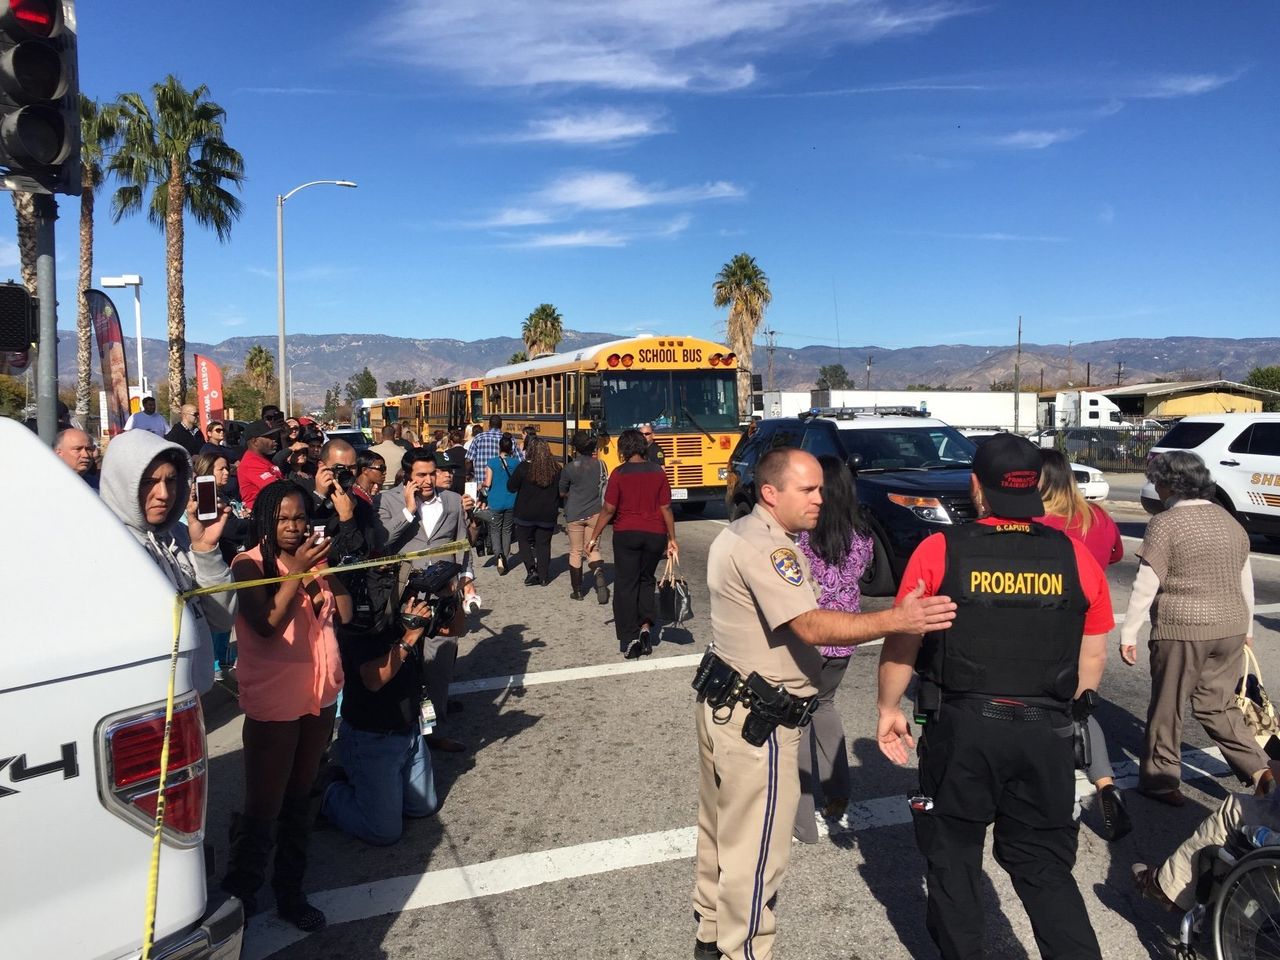 People are evacuated from the shooting scene in San Bernardino, California, on Dec. 2, 2015.